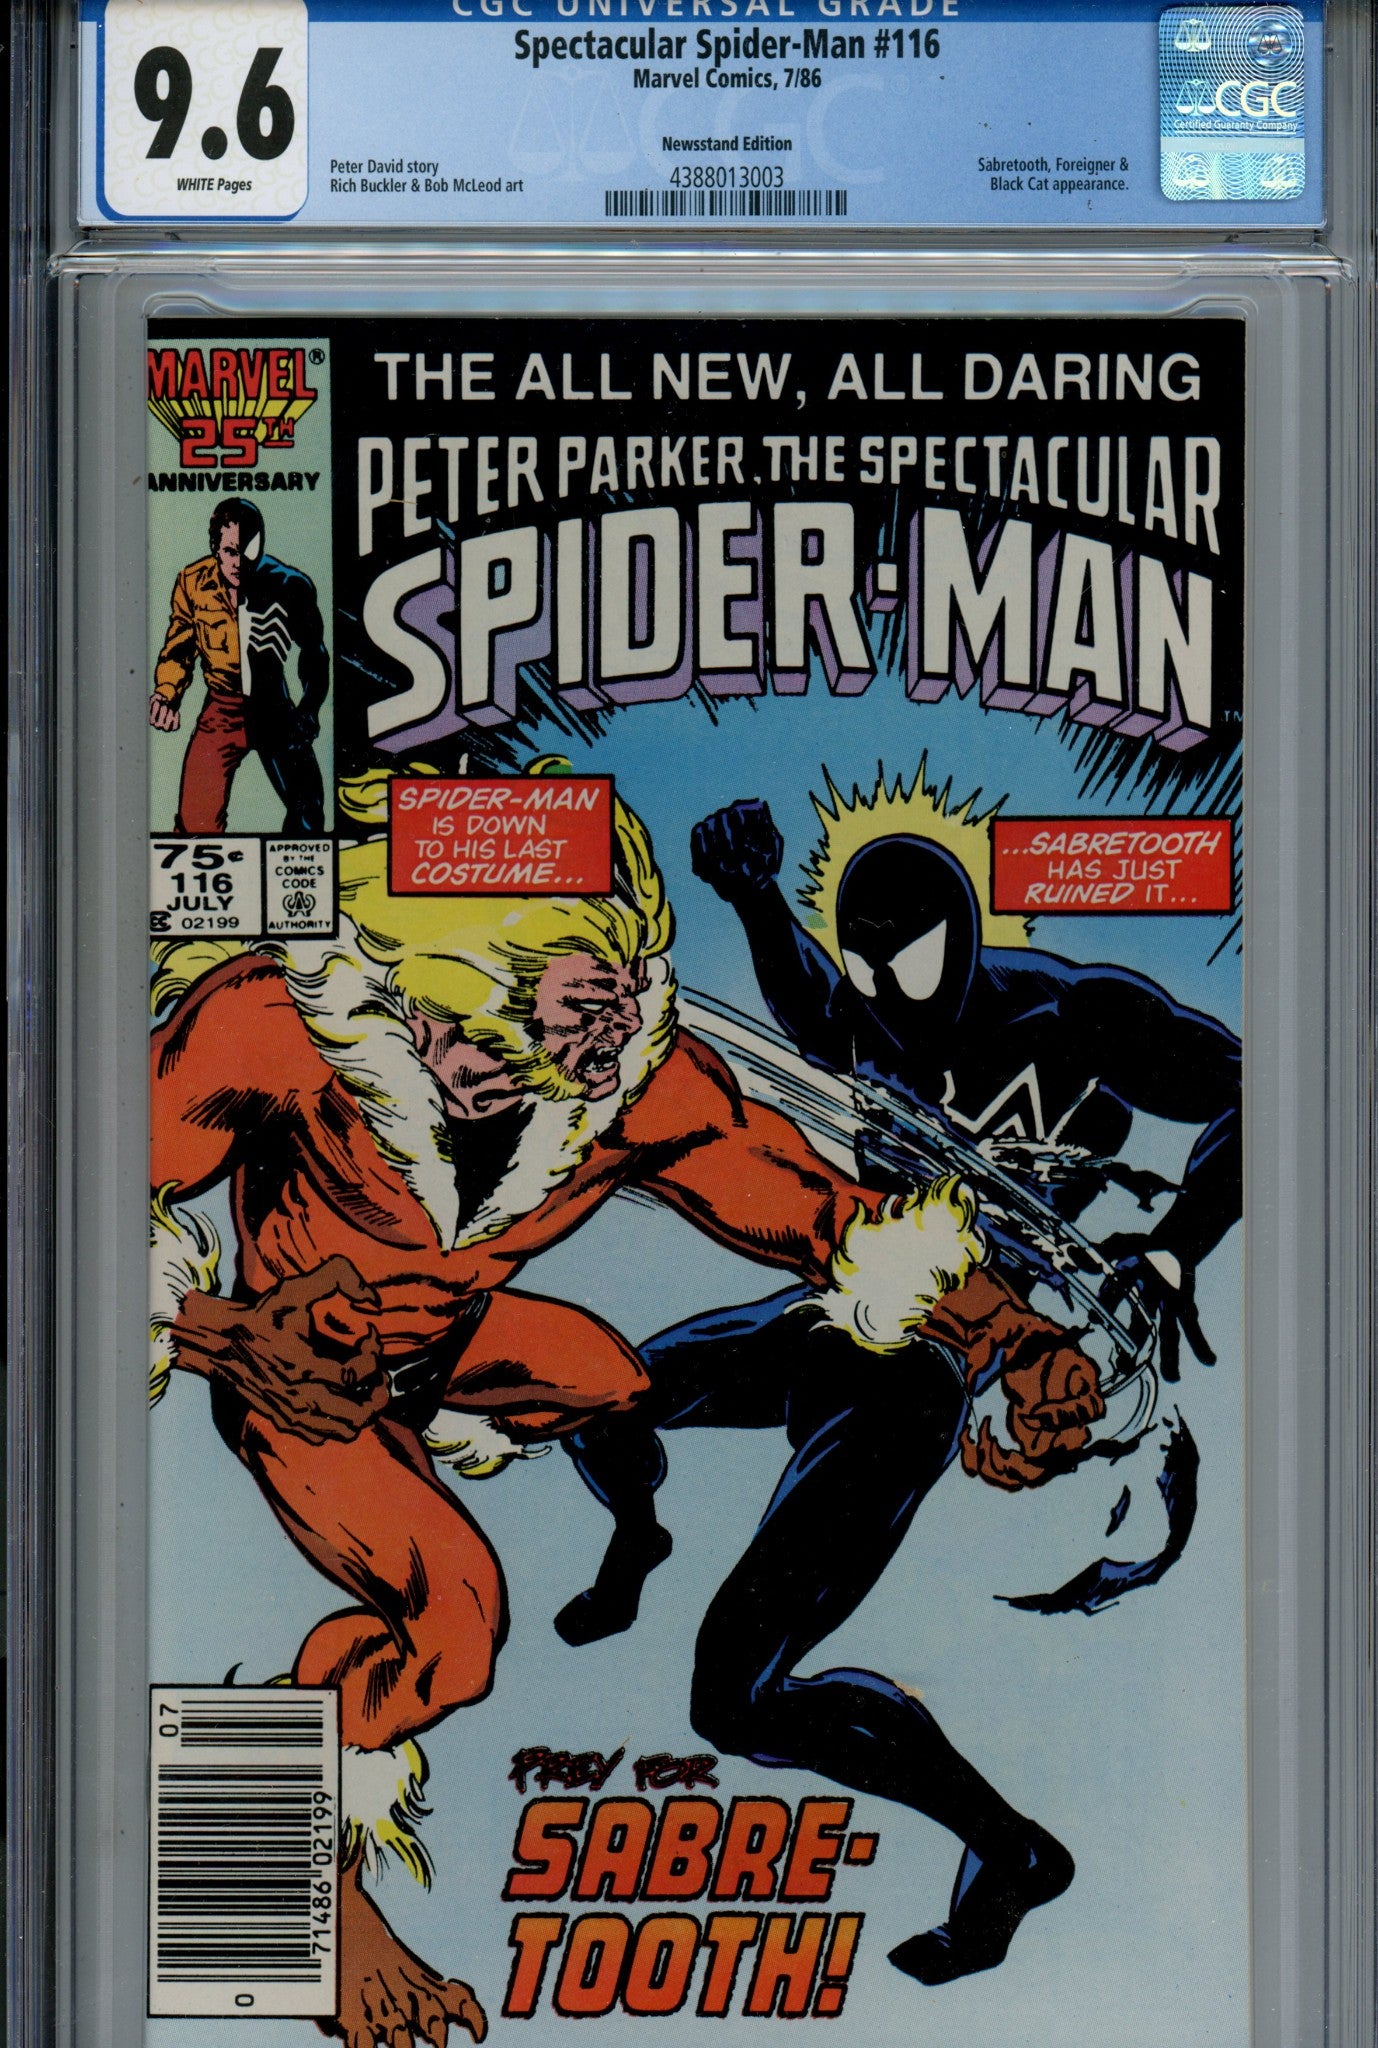 The Spectacular Spider-Man Vol 1 116 CGC 9.6 (NM+) (1986) Newsstand 